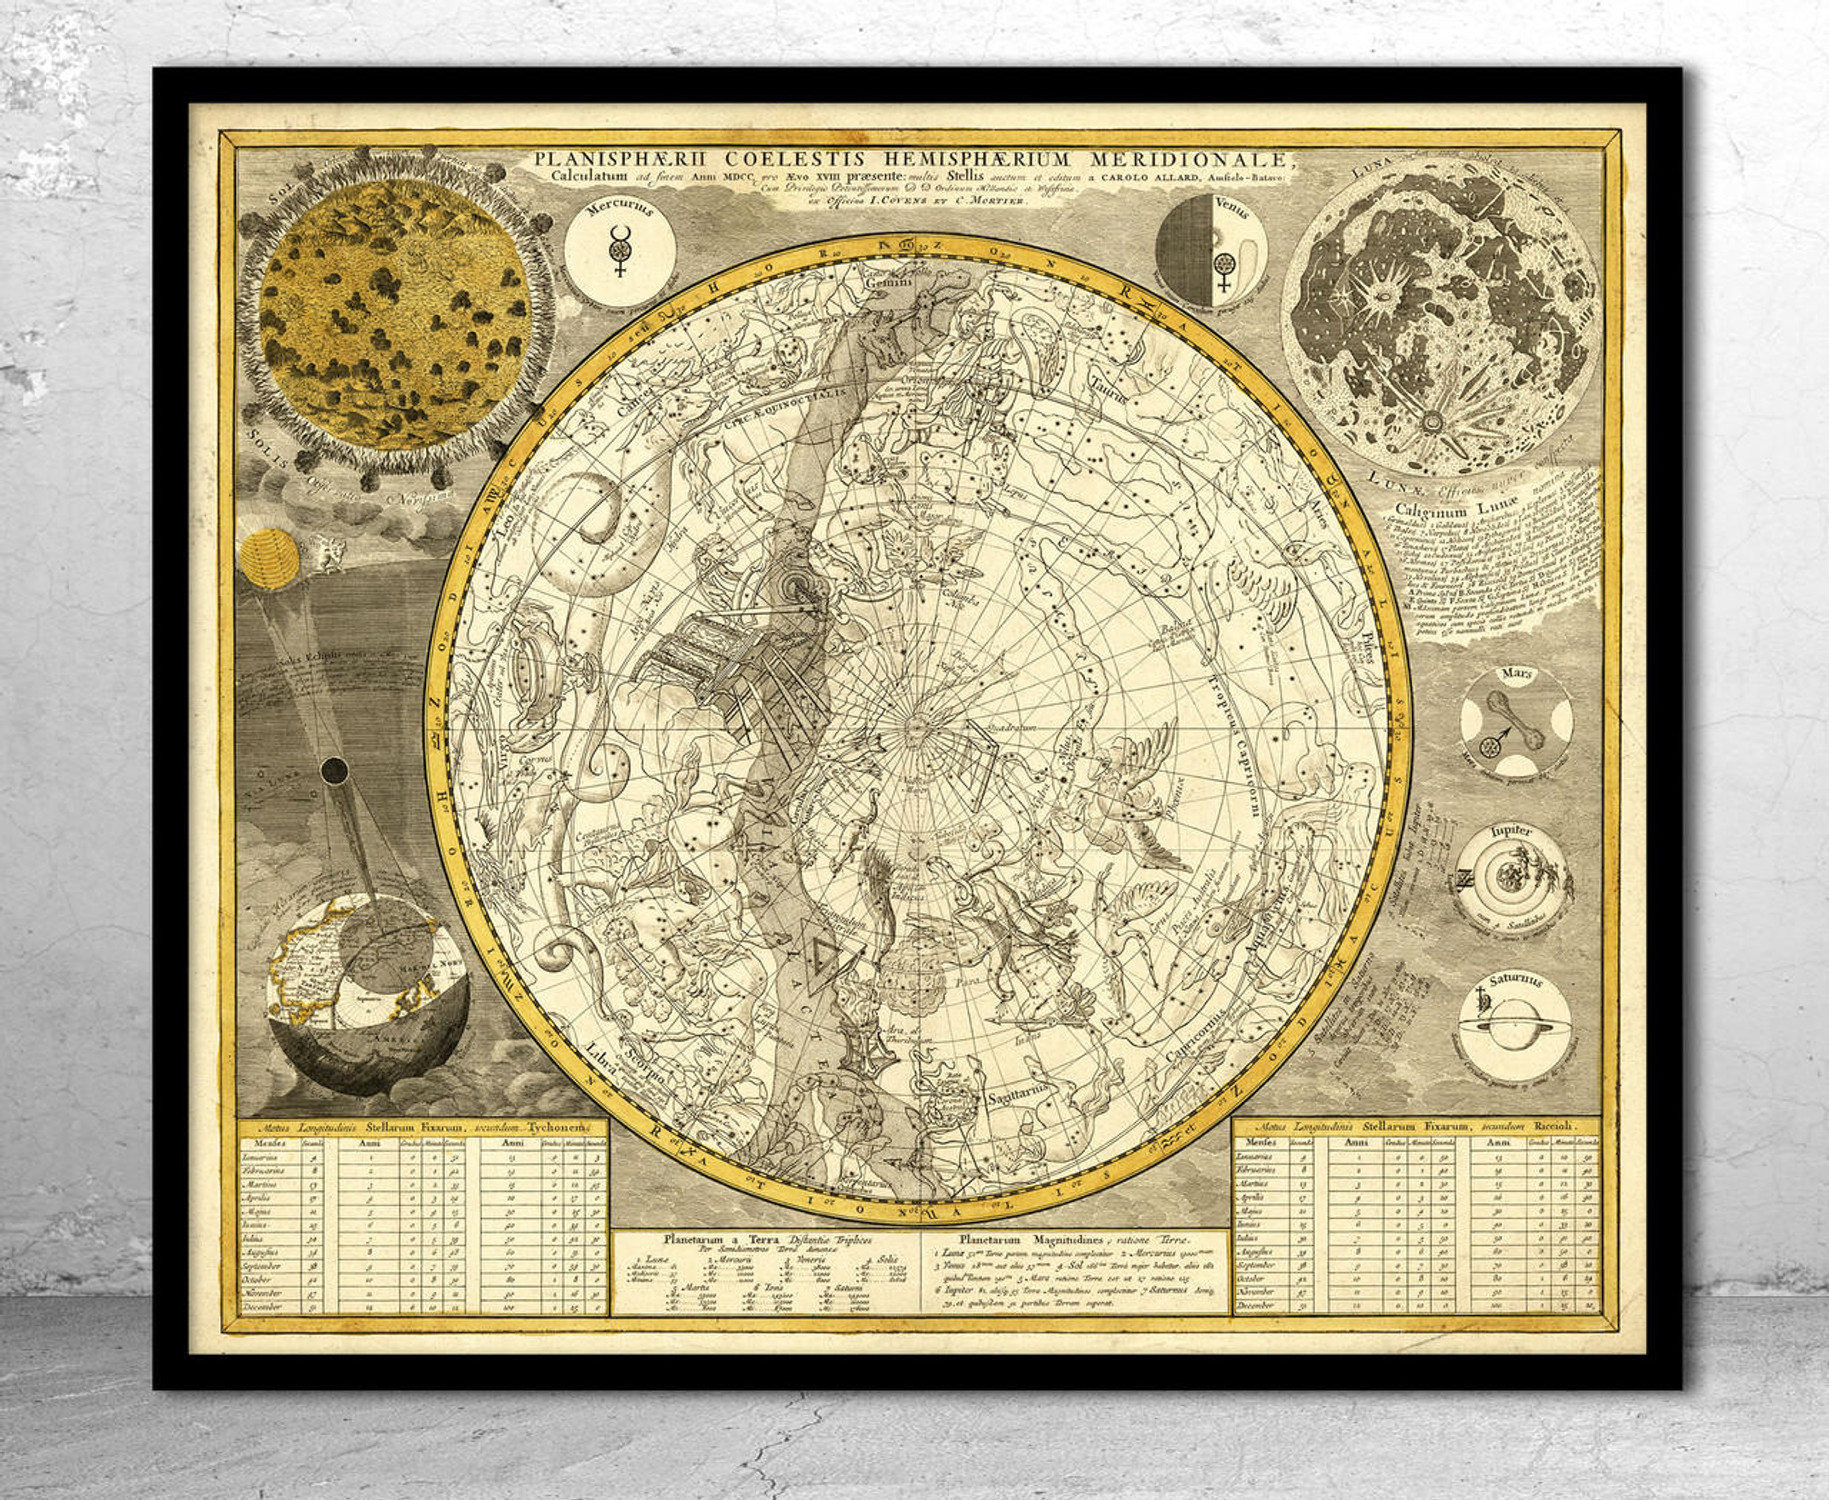 Old 1700 Celestial Chart "Planisphaerii Coelestis" - Antique Star Chart Print, image 1, World Maps Online